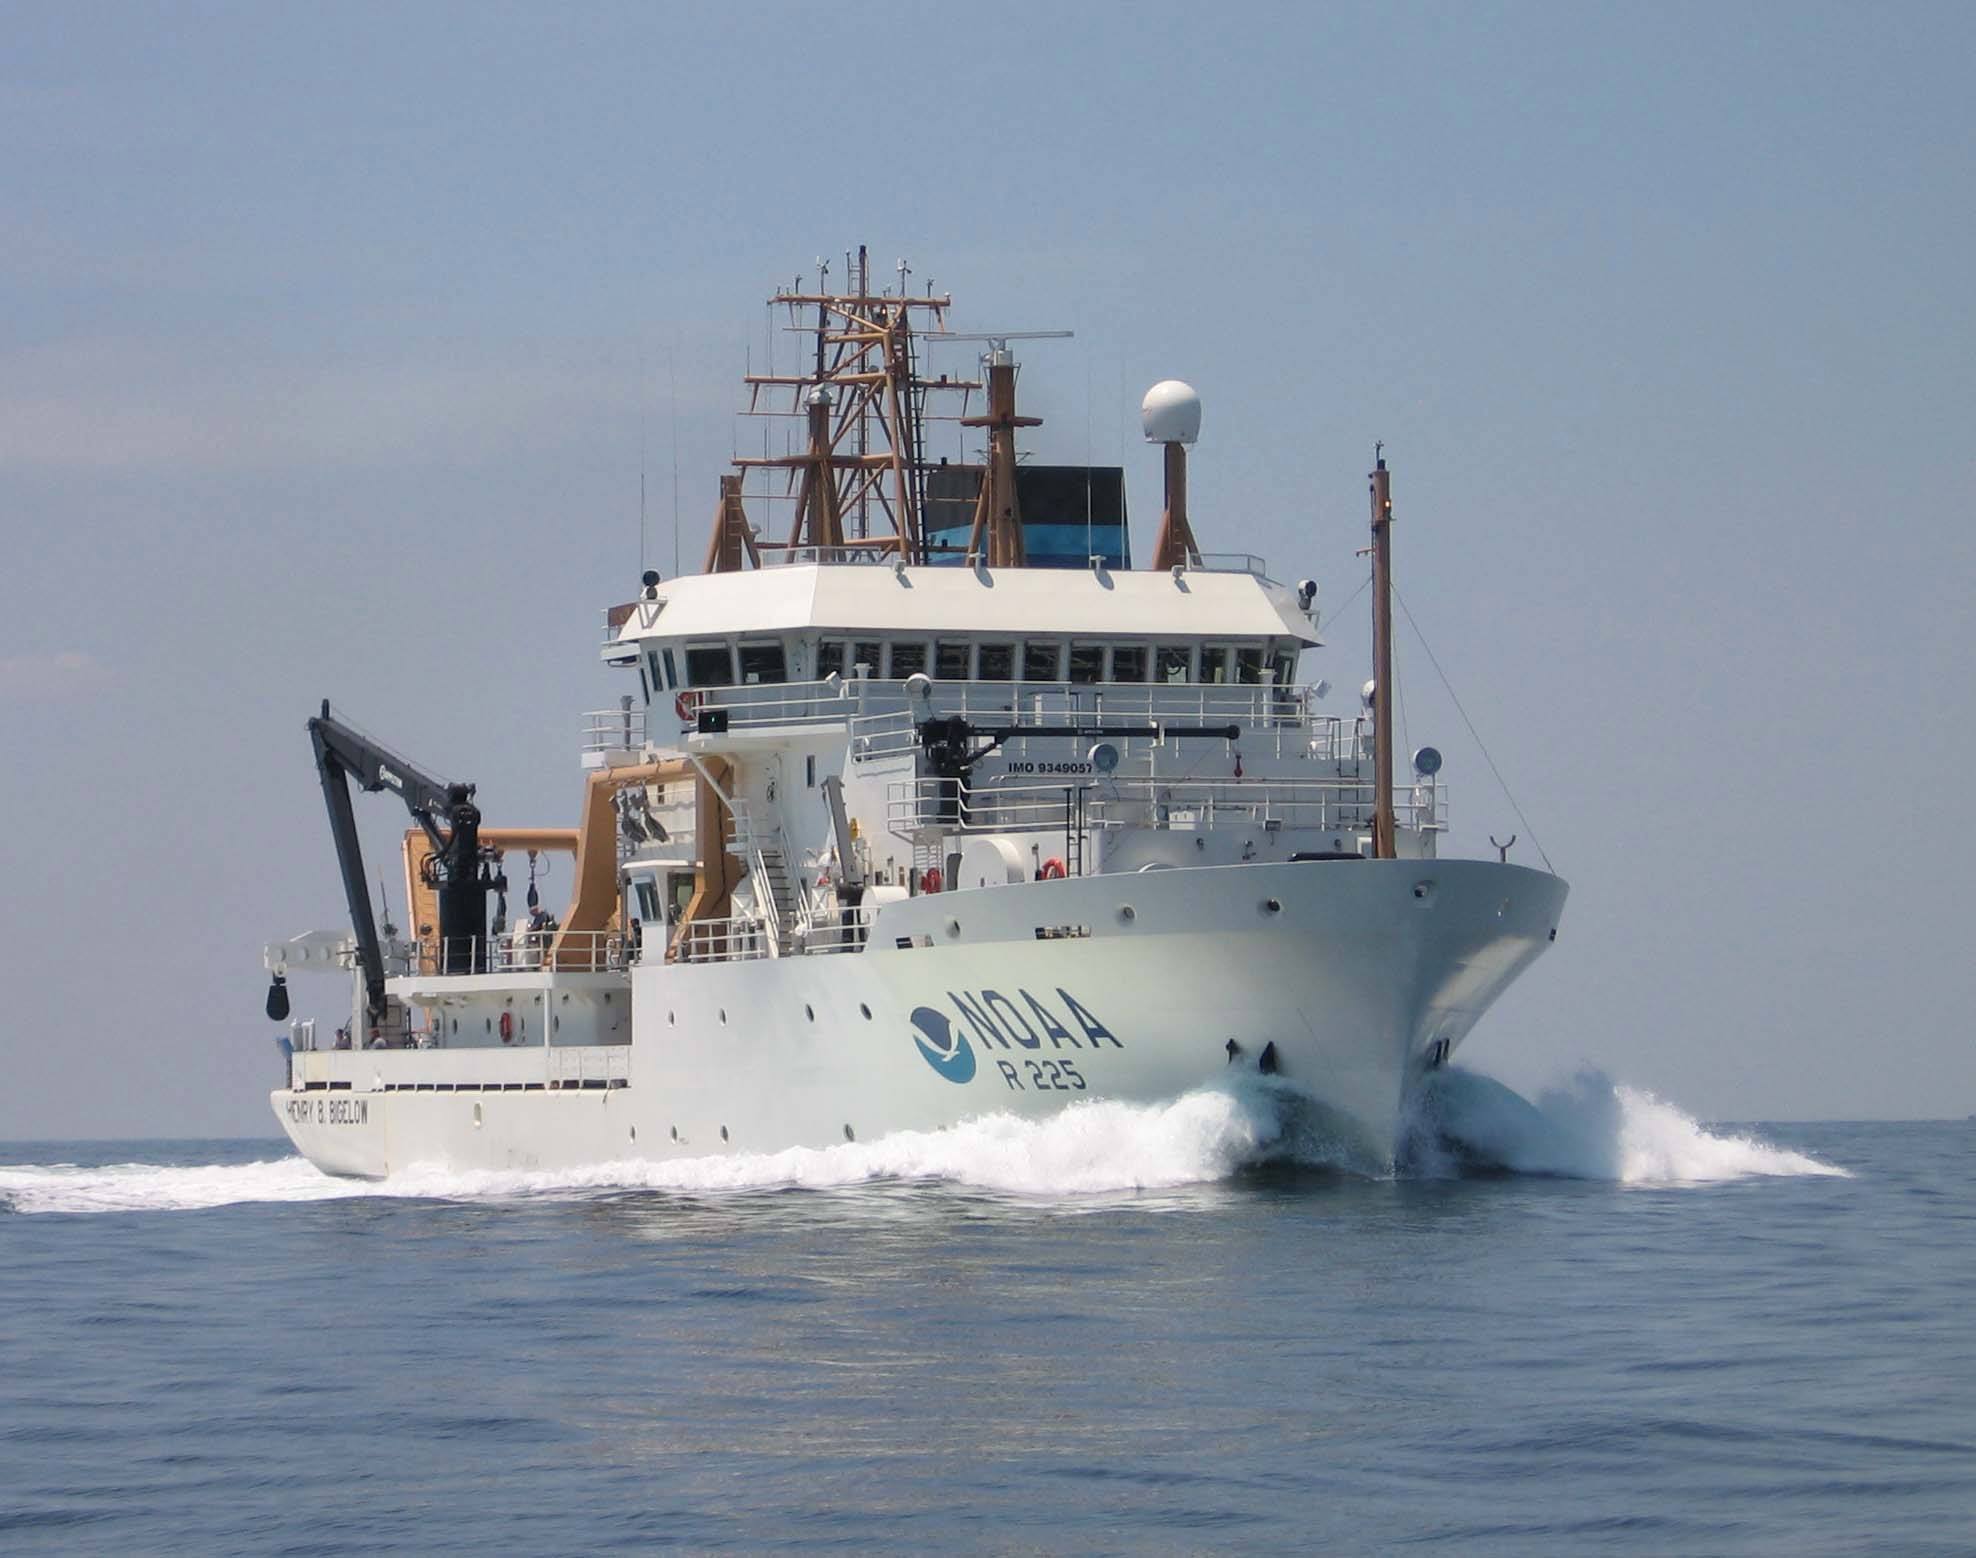 The National Marine Fisheries Service (NMFS) Cooperative  - NOAA